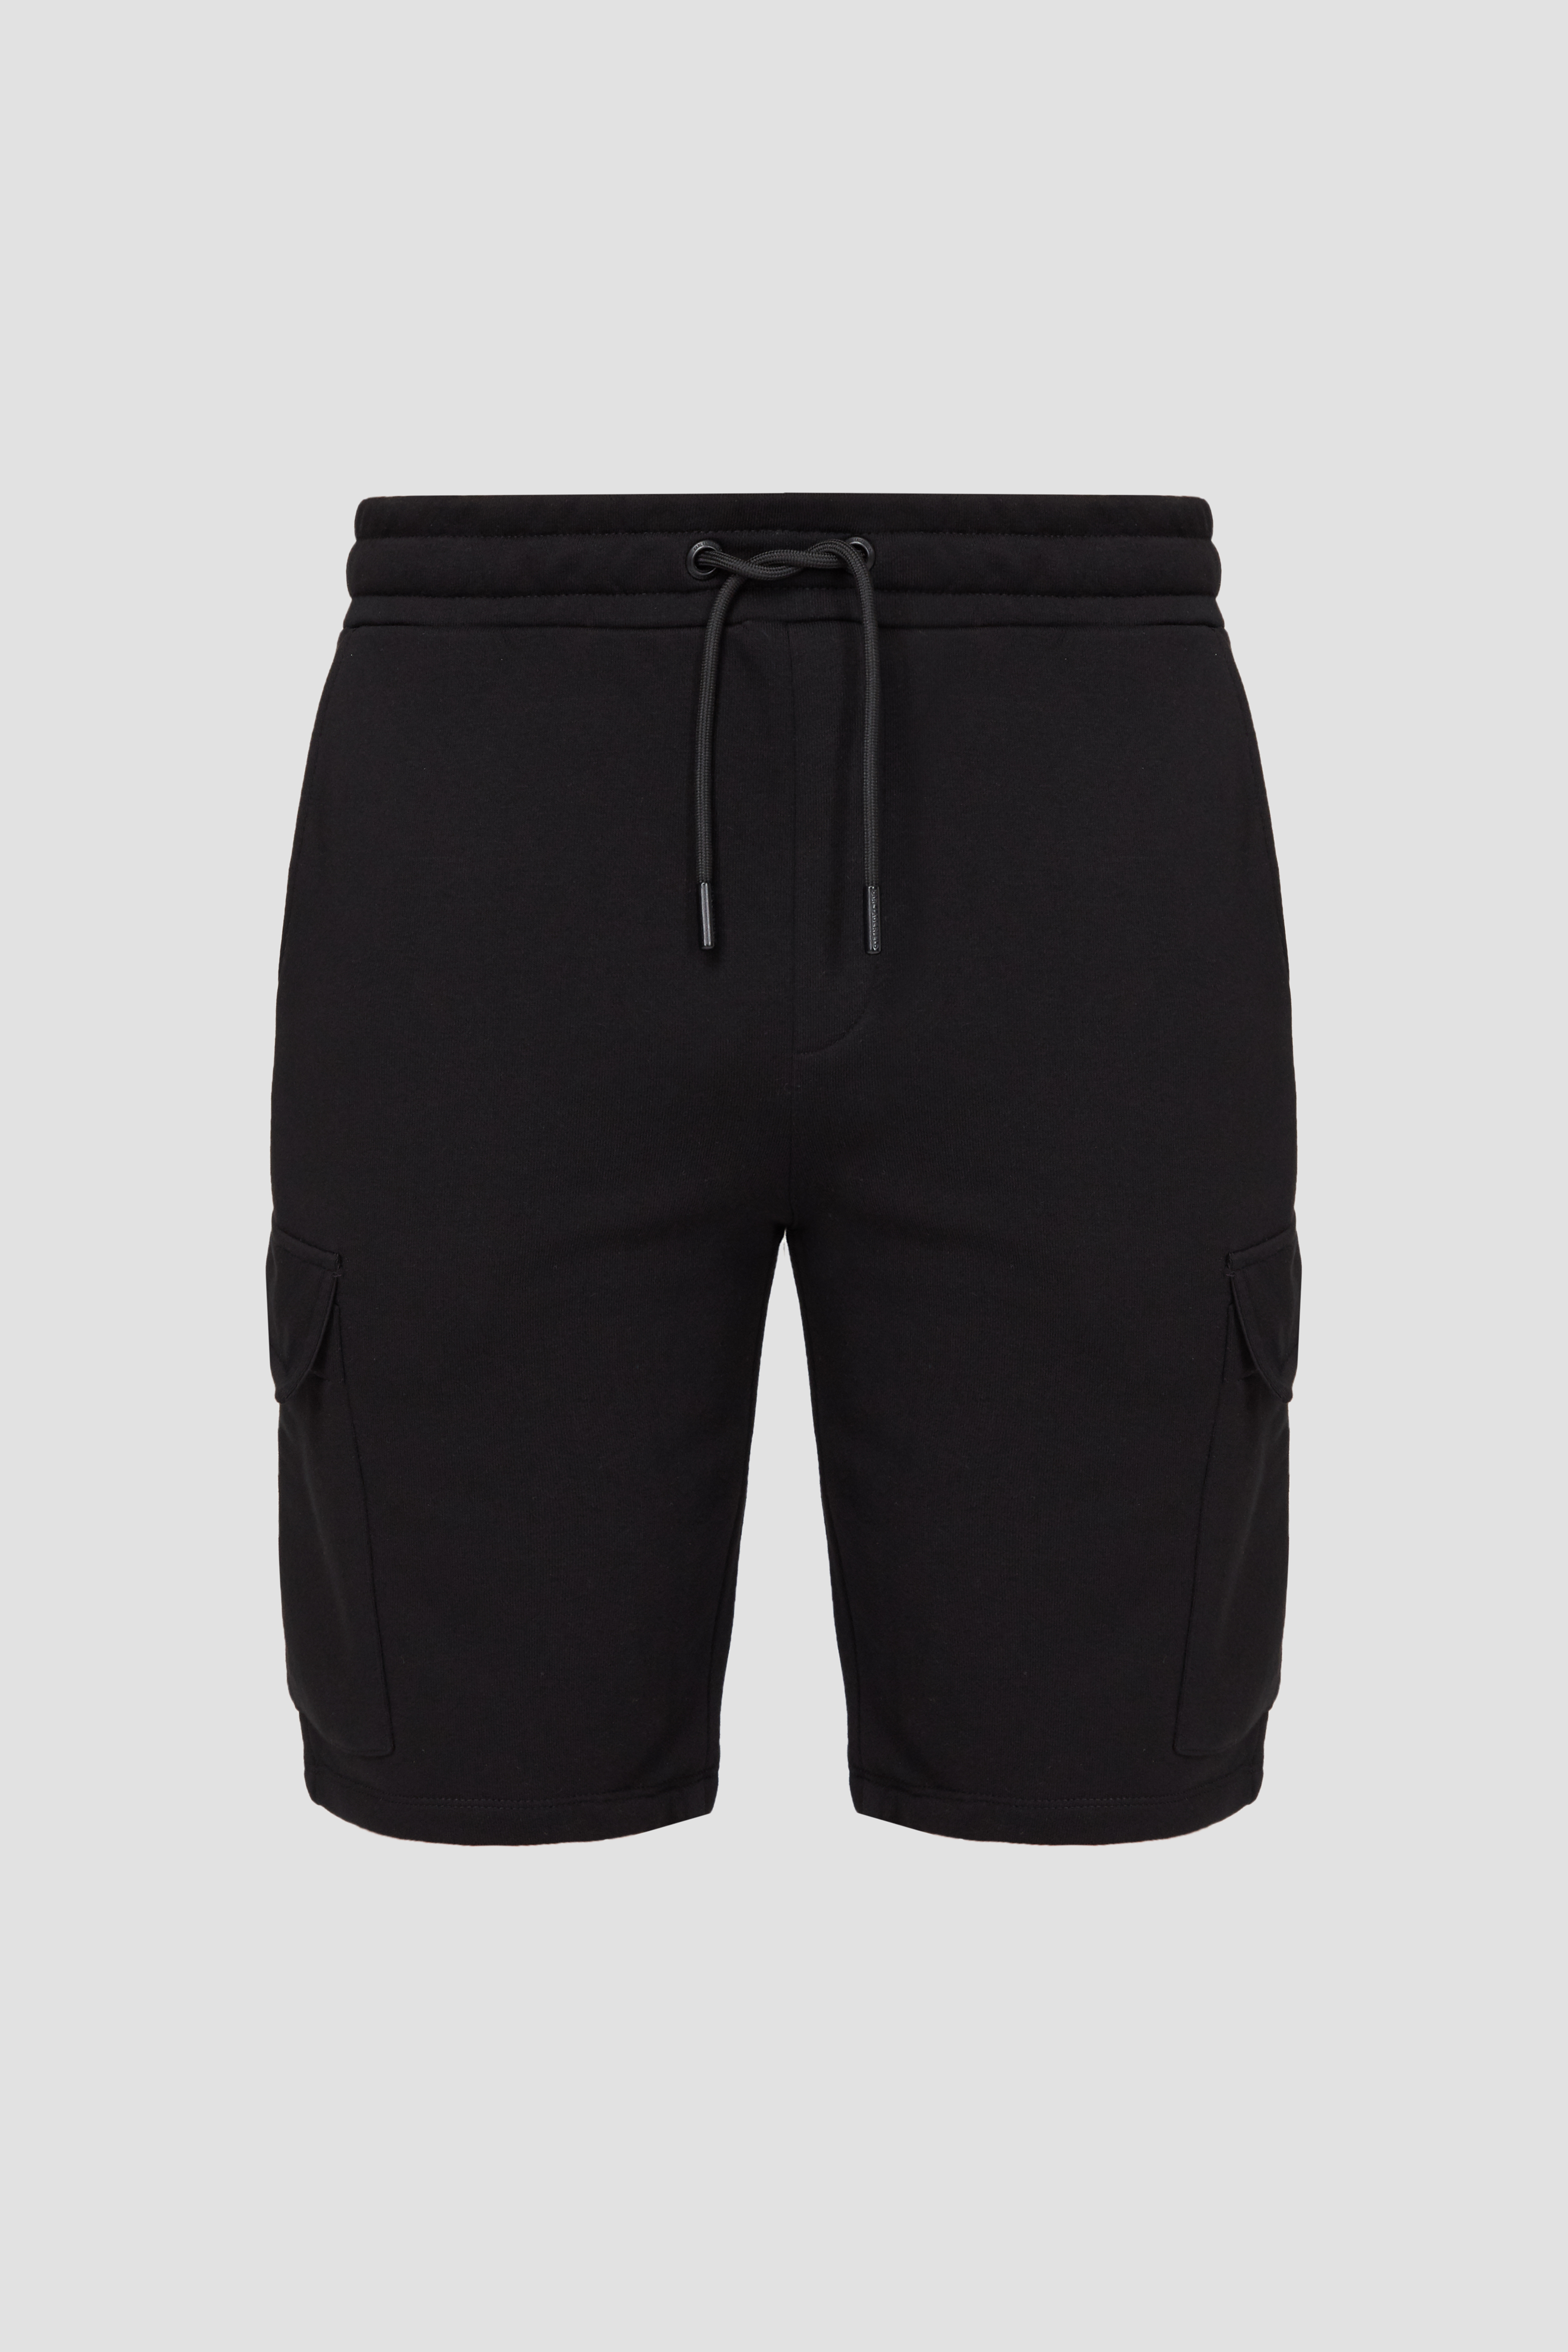 Мужские черные шорты Karl Lagerfeld 523910.705088;990